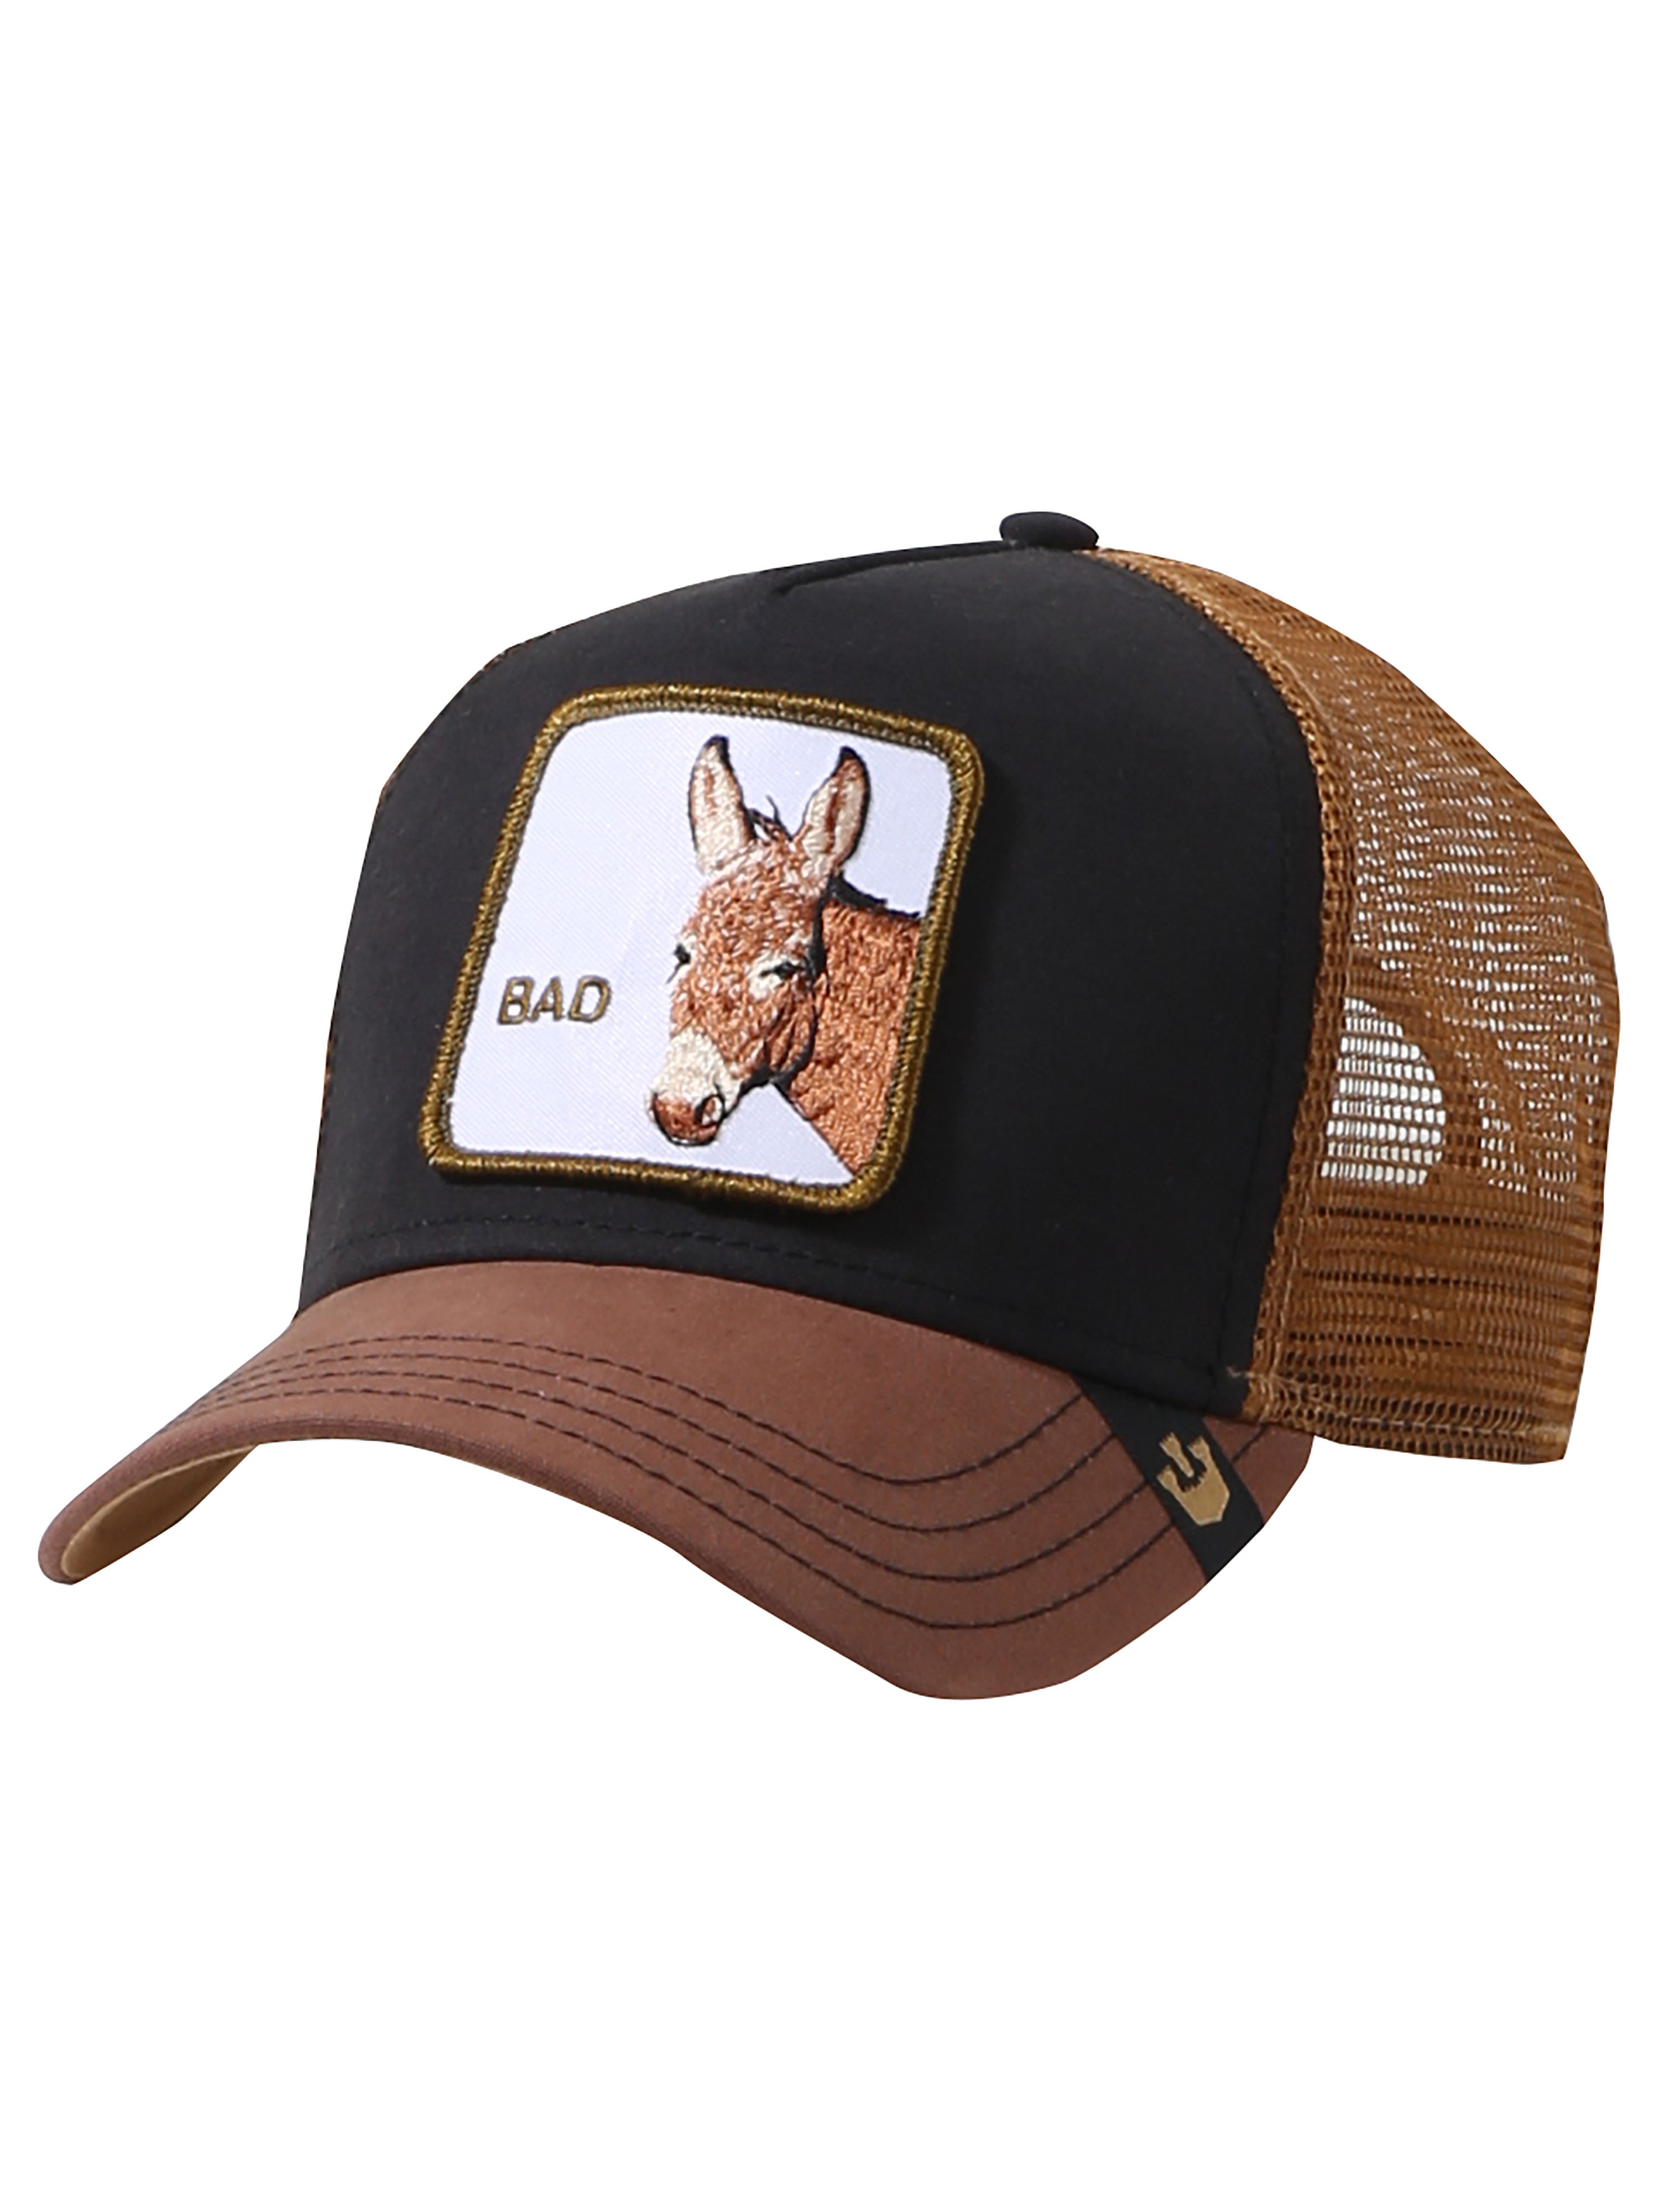 Goorin Bros Animal Farm Snapback Trucker Hat Cap Donkey Bad Ass Black Brown